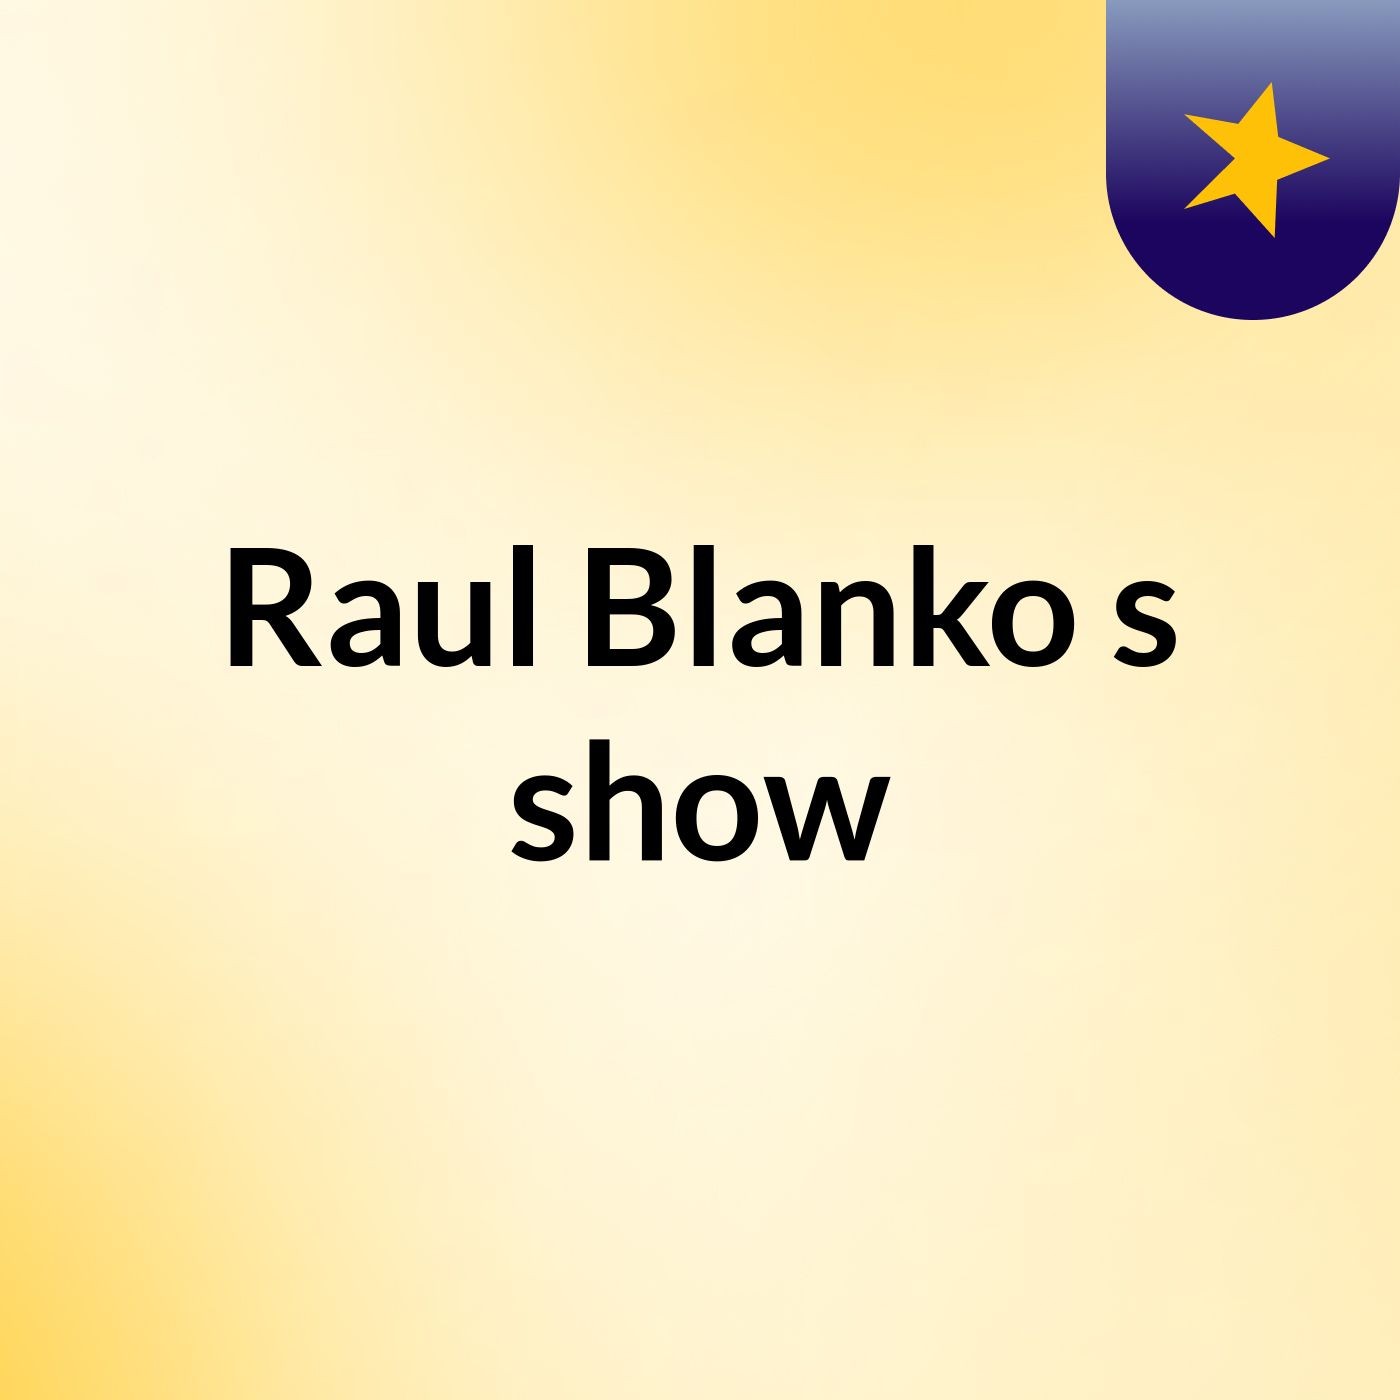 Raul Blanko's show